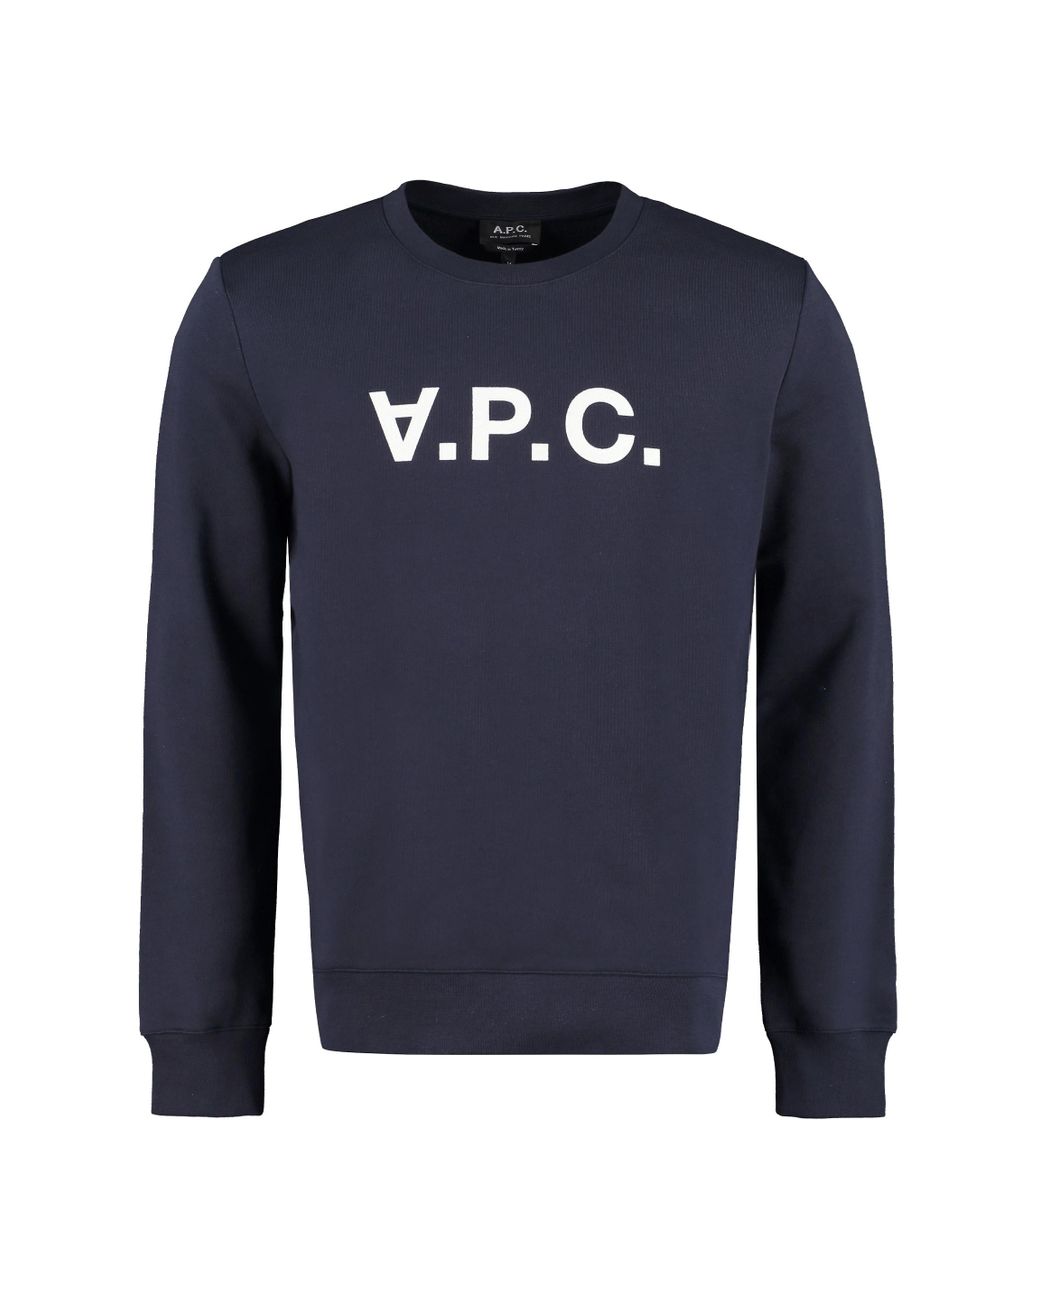 A.P.C. Vpc Cotton Crew-neck Sweatshirt in Blue for Men - Lyst